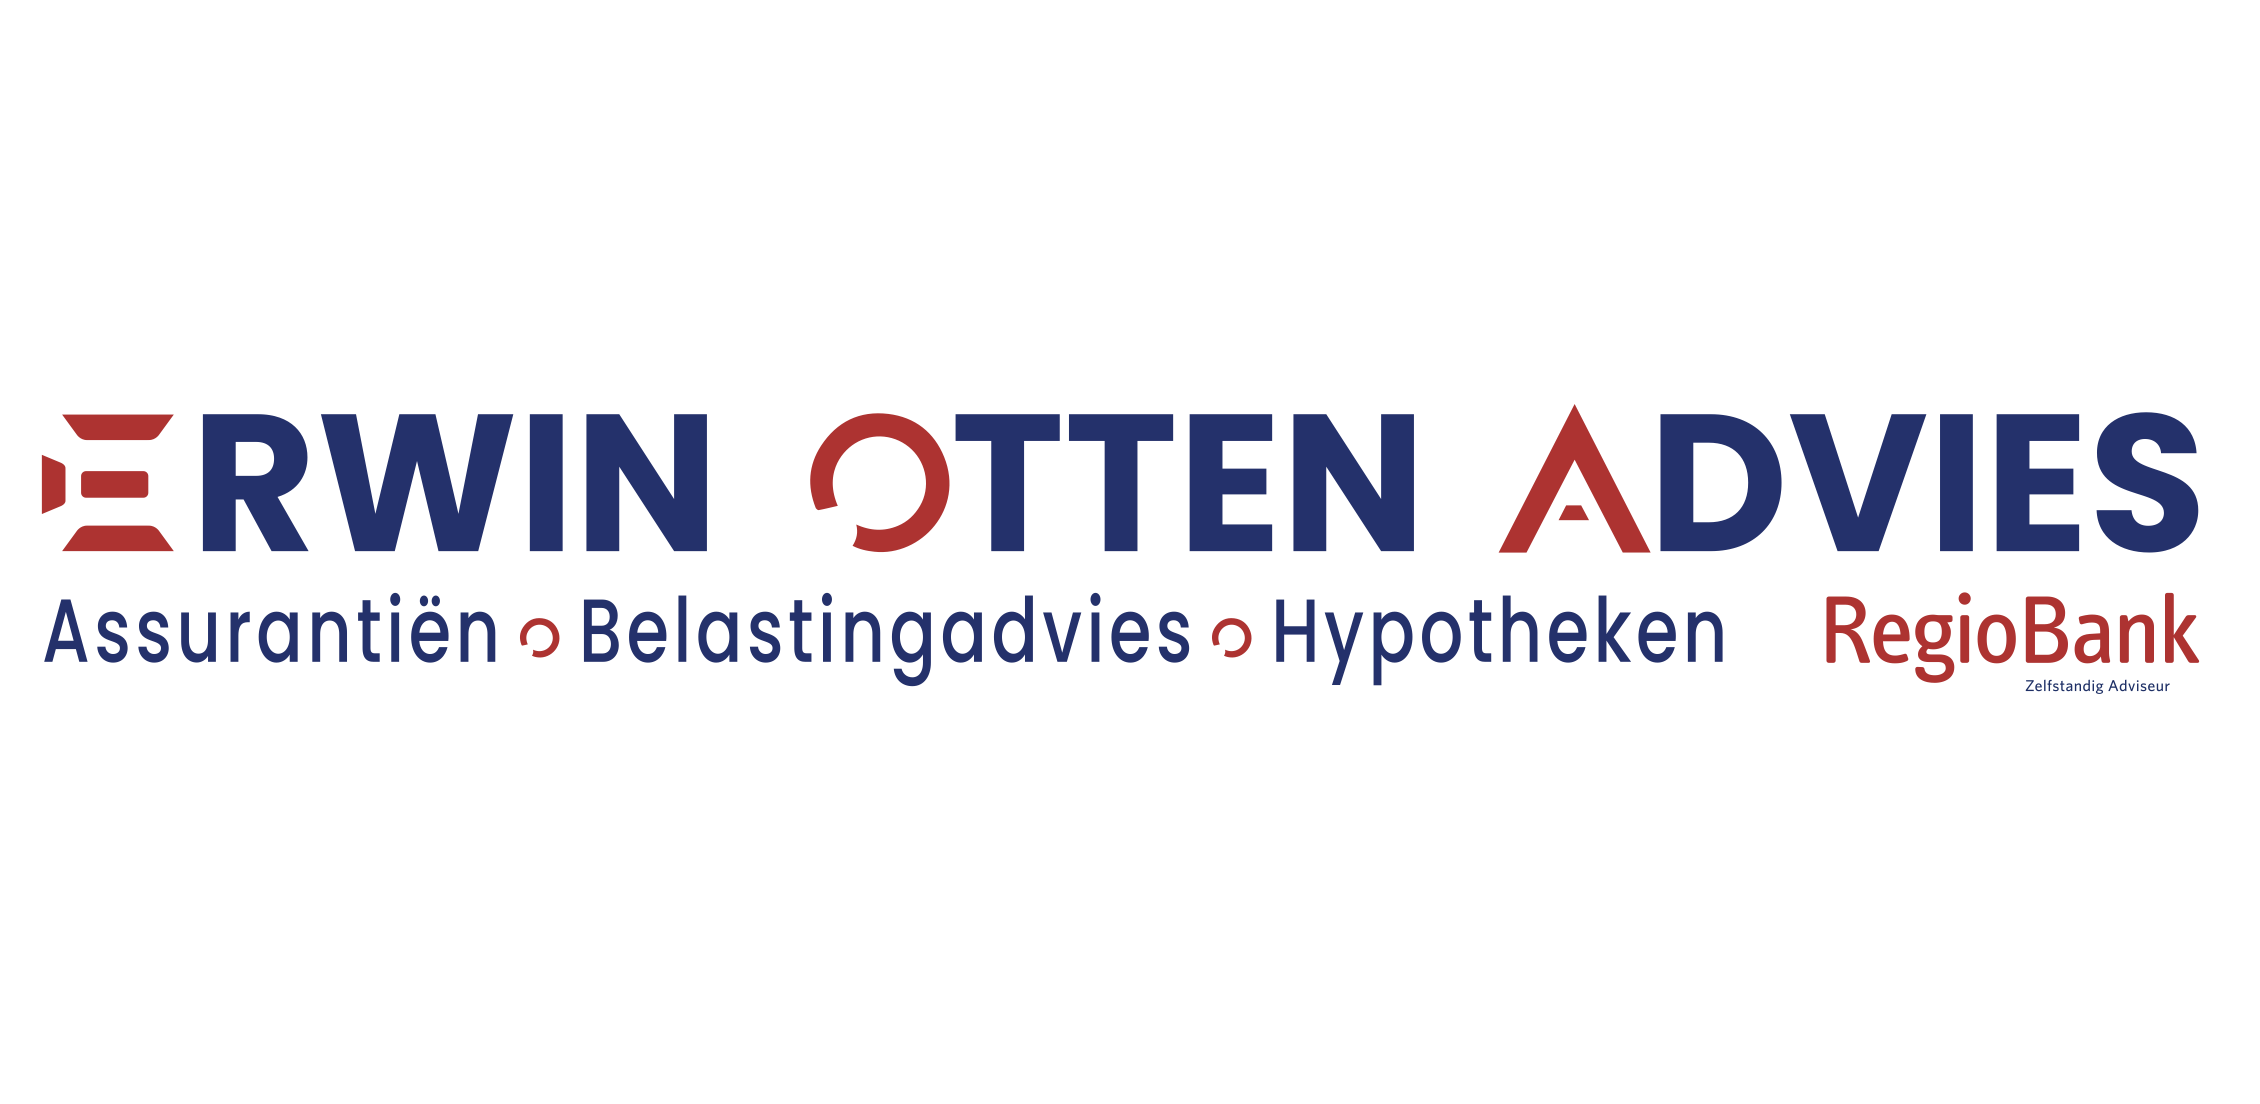 Regiobank & Advies Erwin Otten